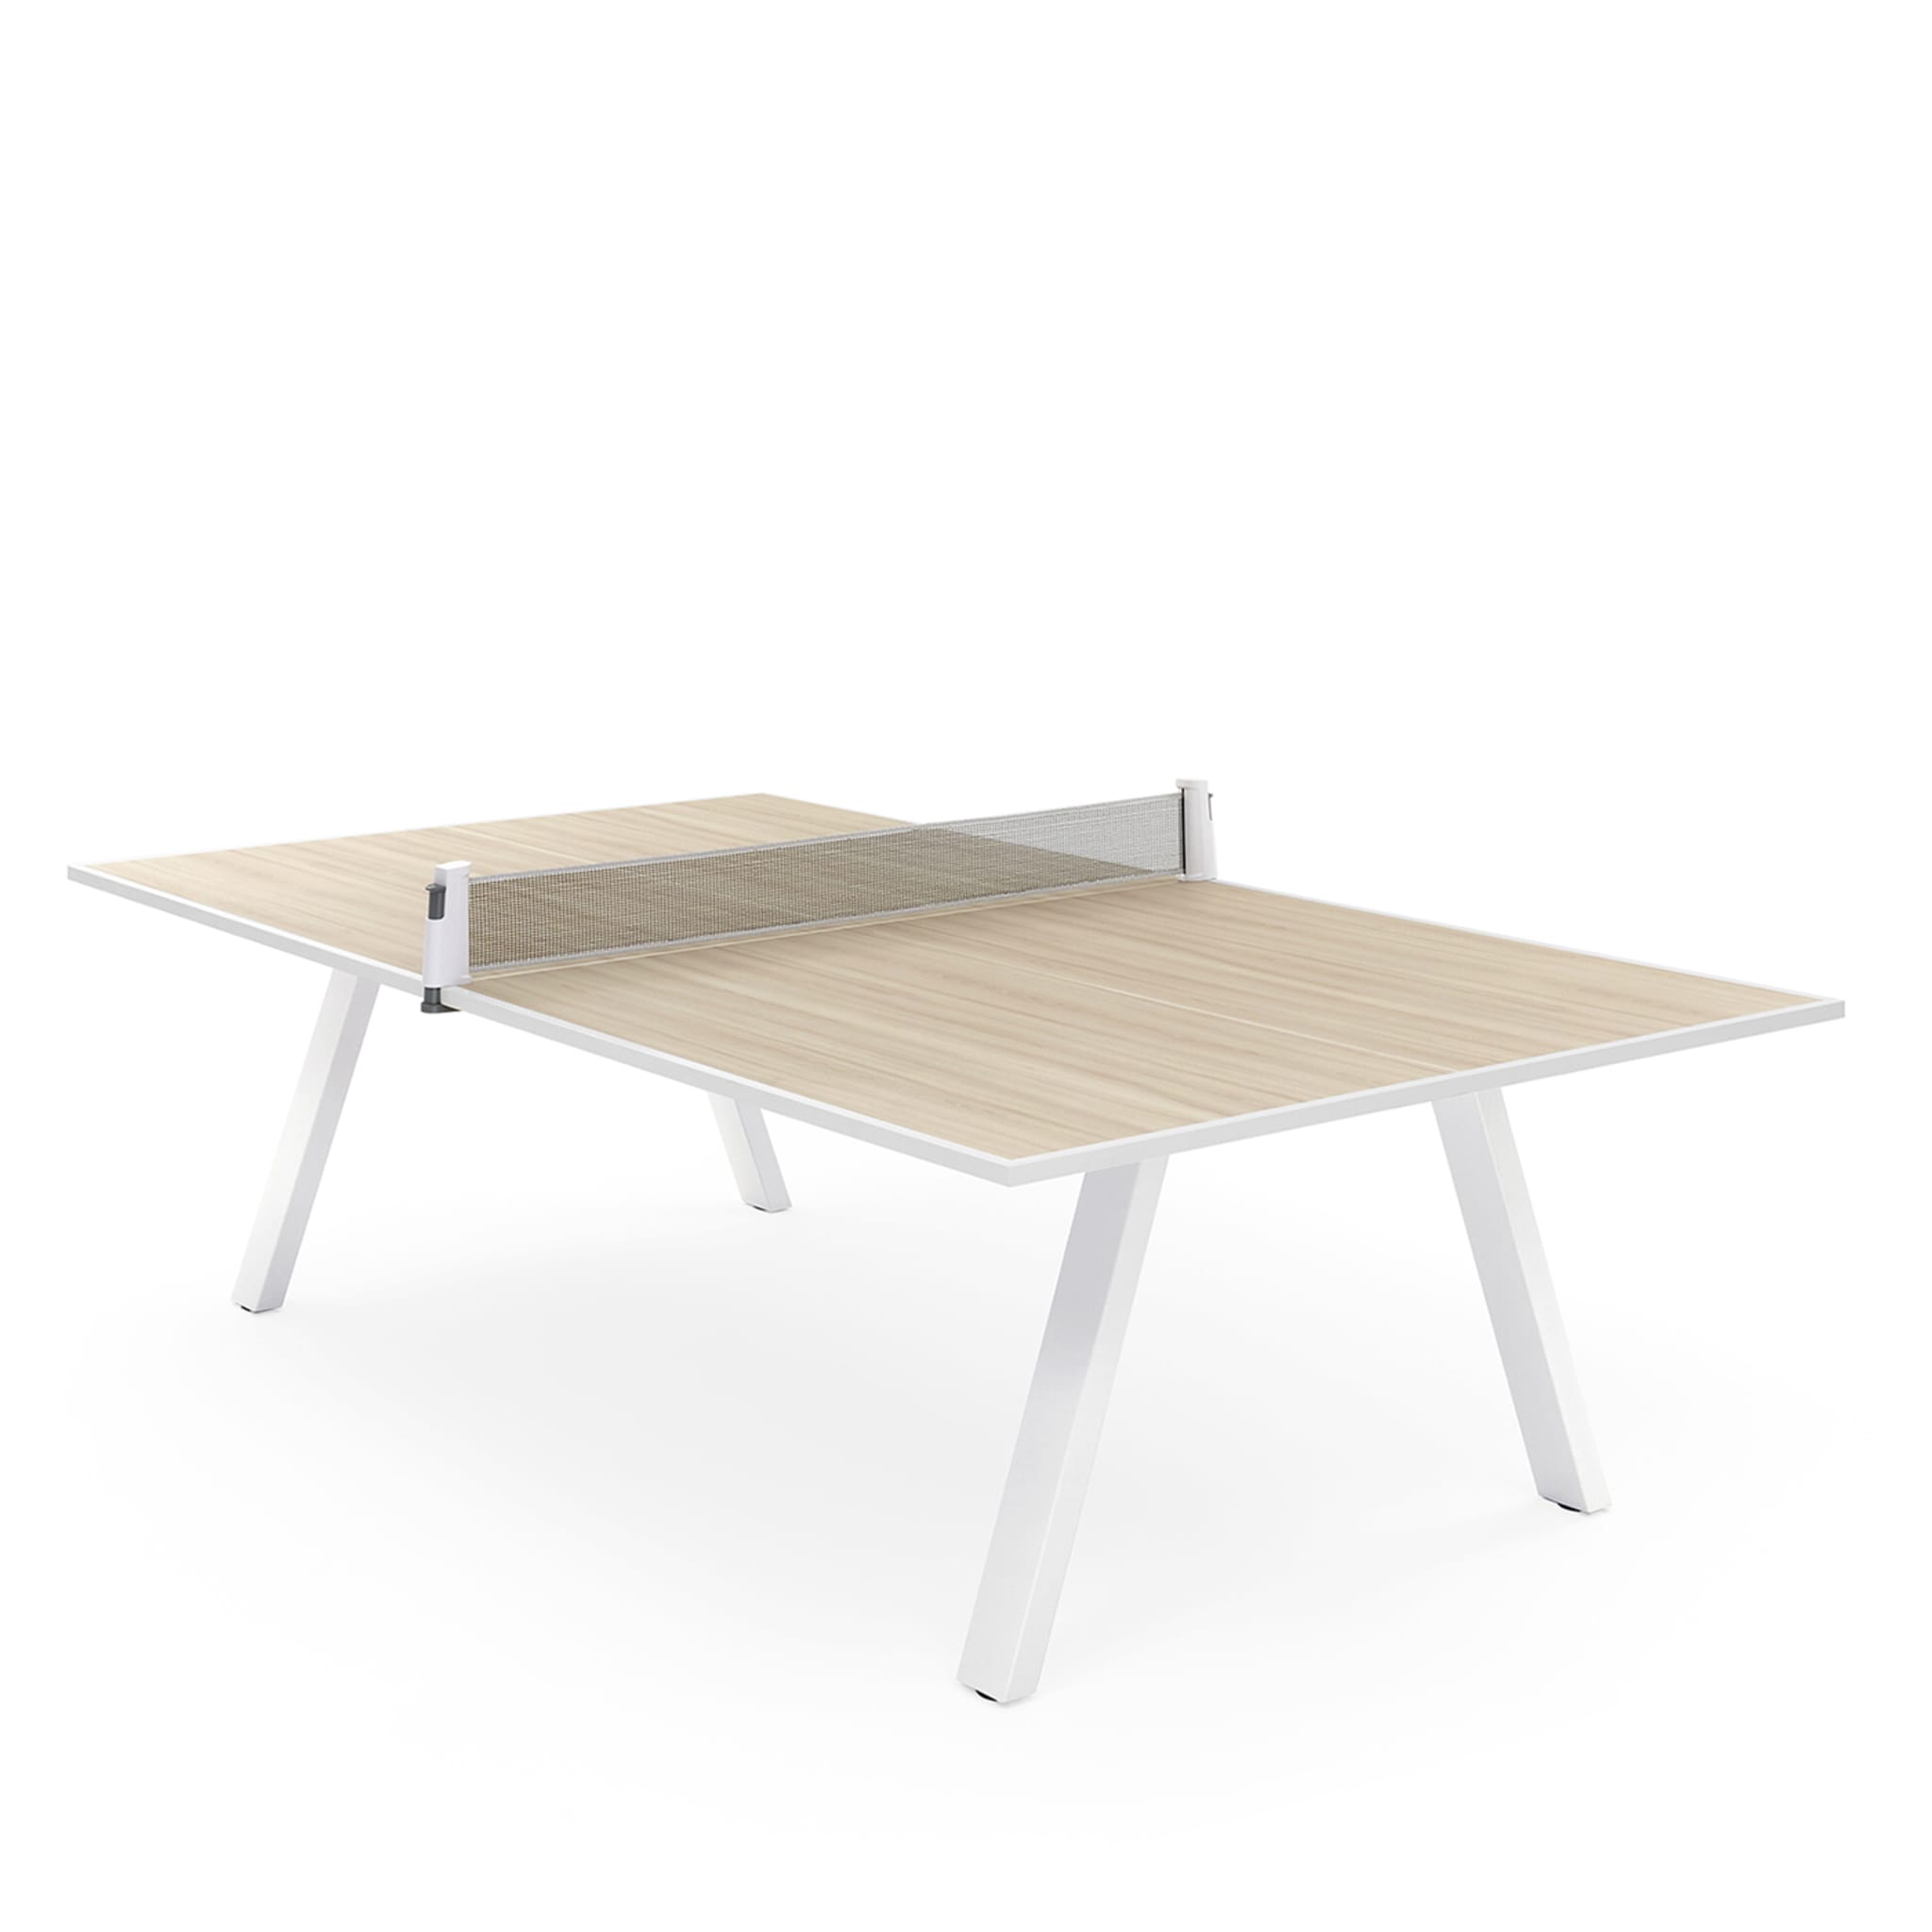 Grasshopper Beige Ping Pong Table by Basaglia + Rota Nodari - Alternative view 1